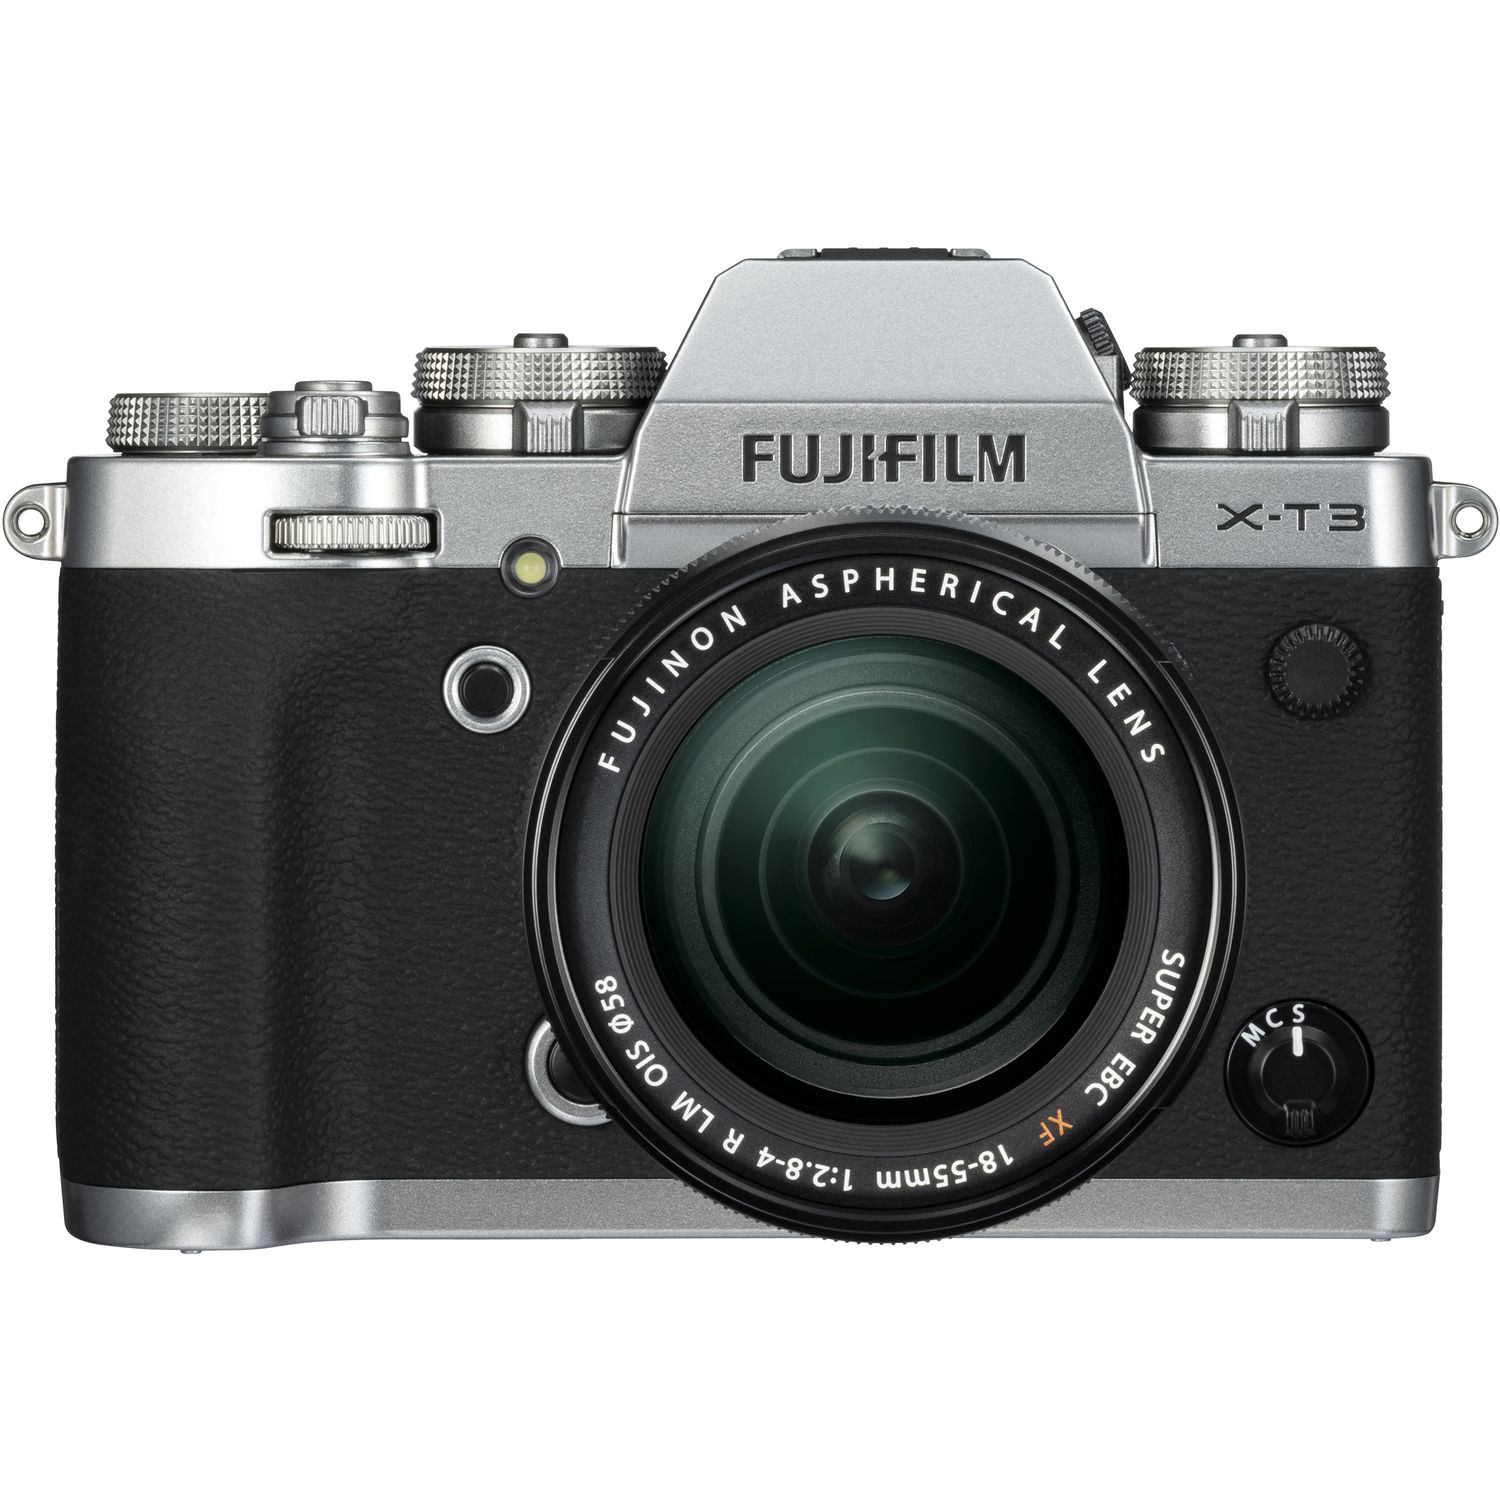 Fujifilm X-T3 Mirrorless Camera with 18-55mm Lens Kit (Silver)